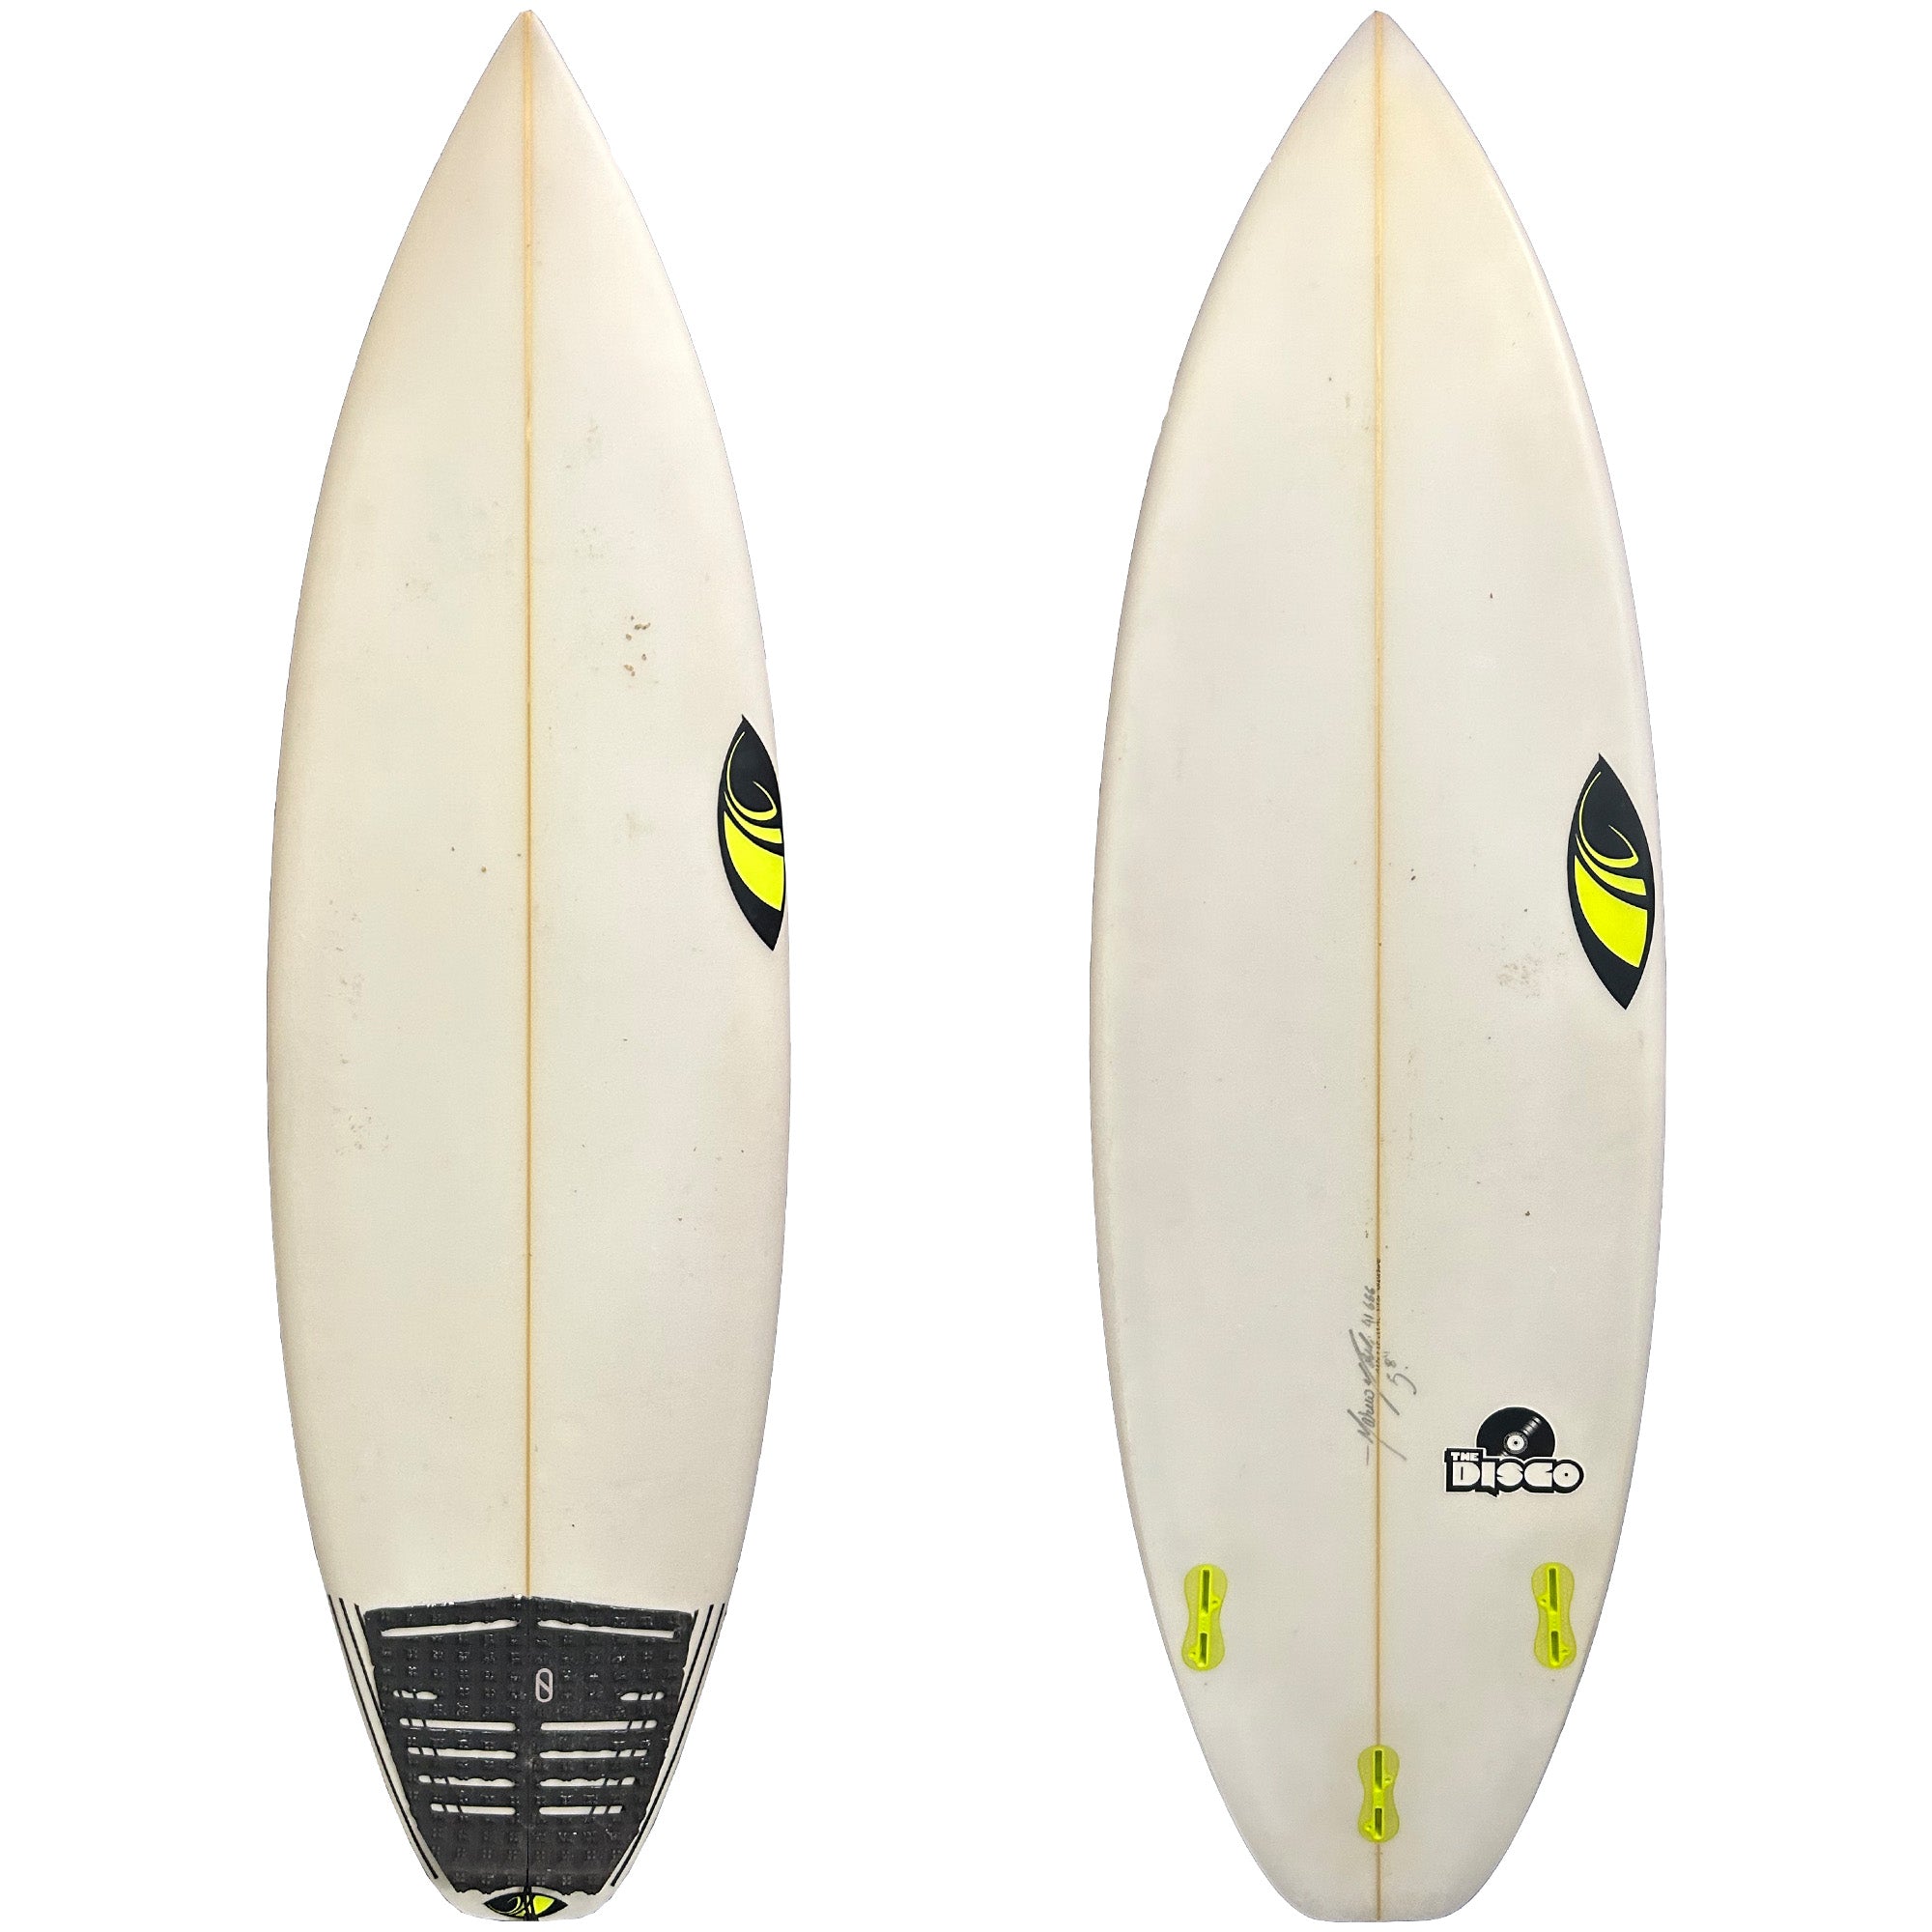 Sharp Eye Disco 5'8 Consignment Surfboard